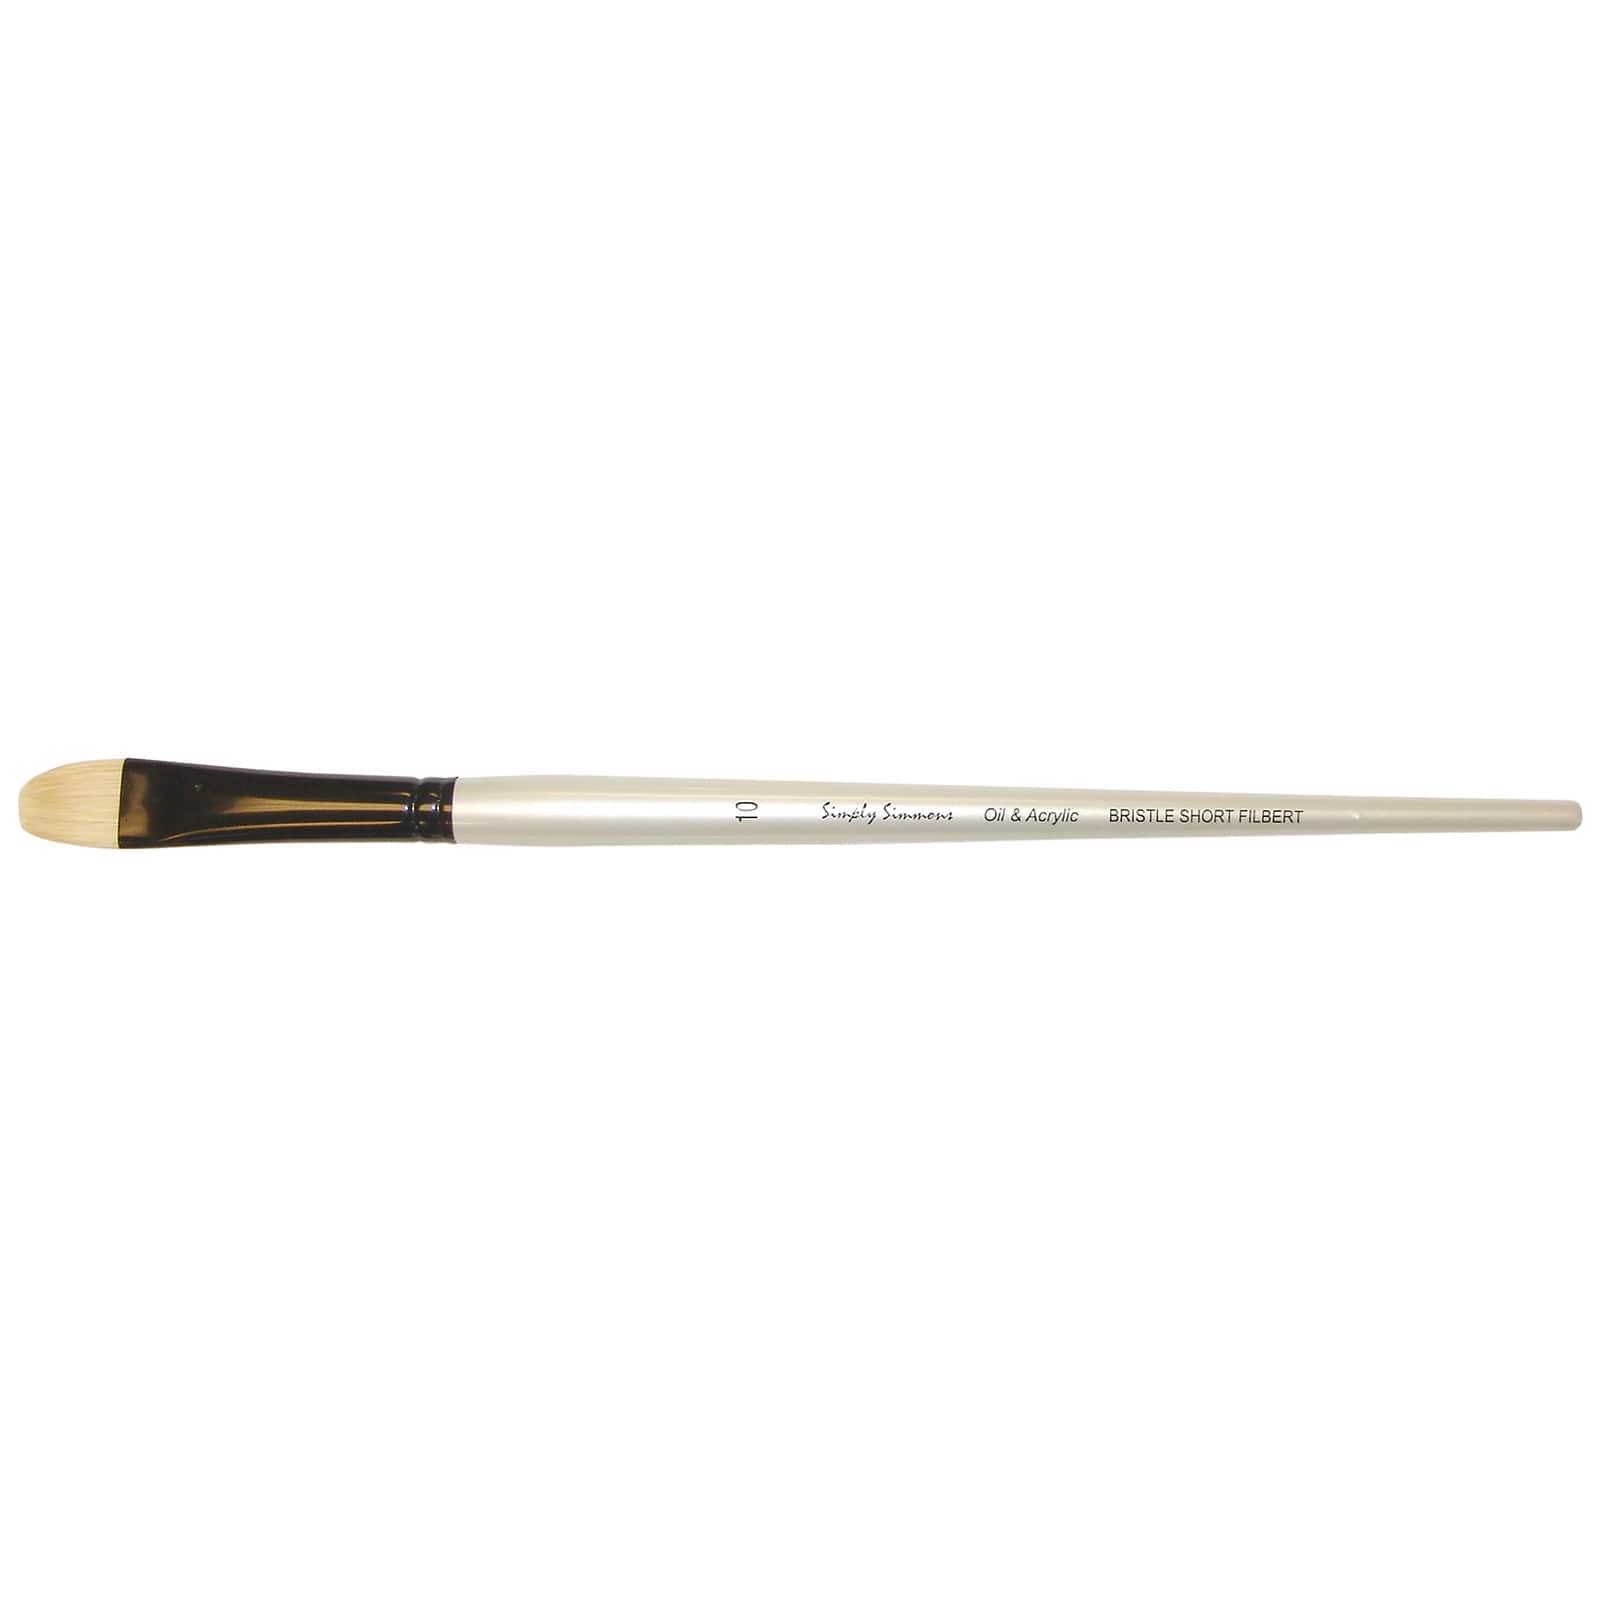 Princeton™ Aspen™ Synthetic Long Handle Flat Brush